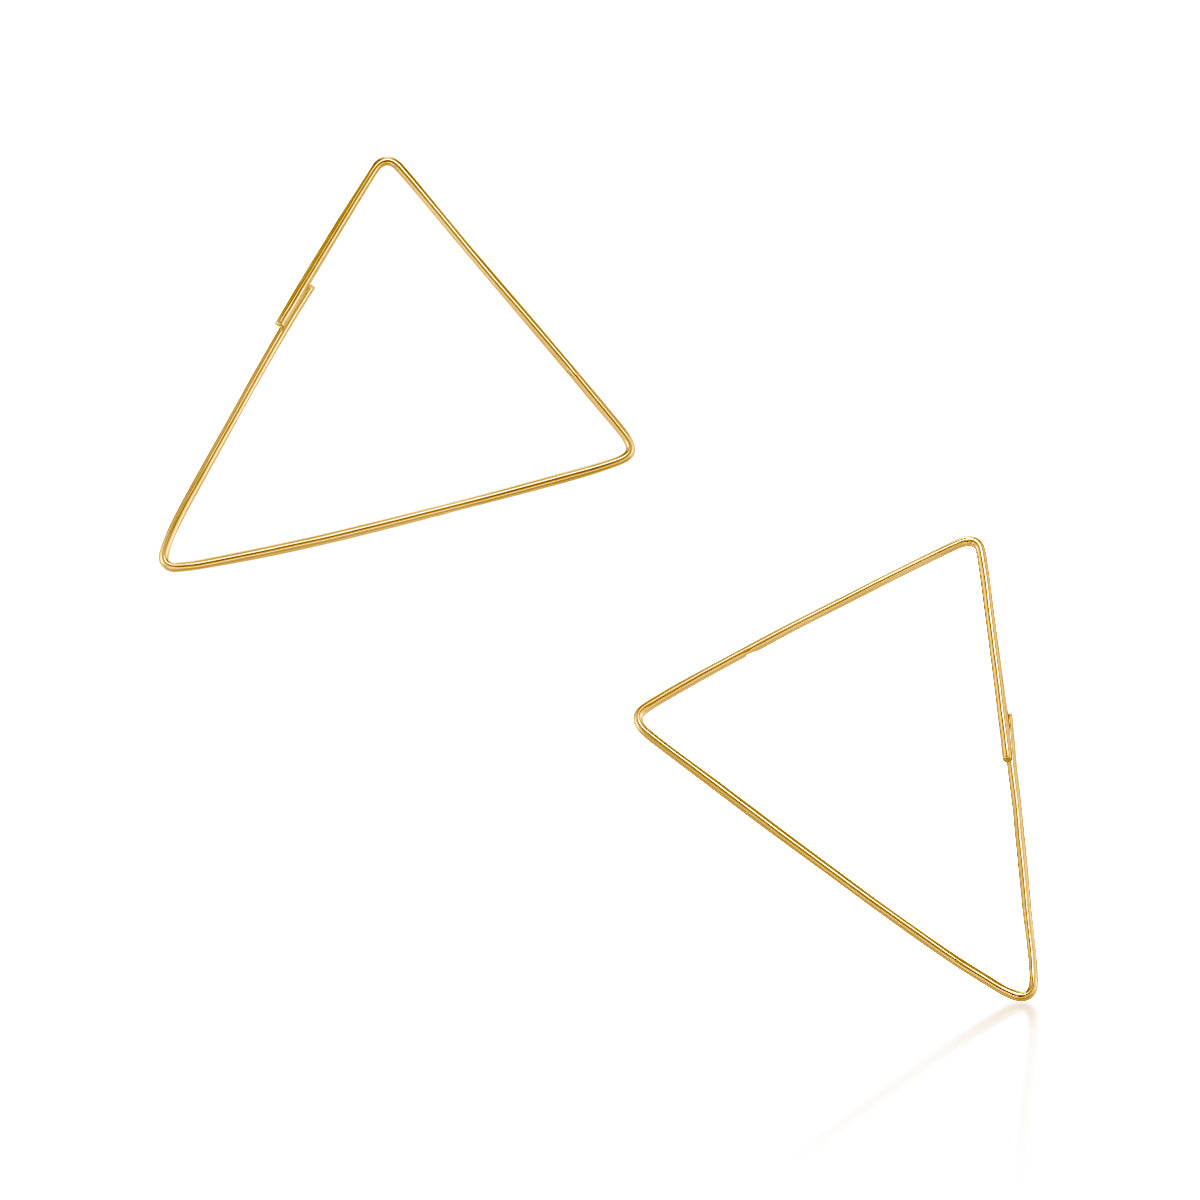 Geometric Triangle Gold Earrings